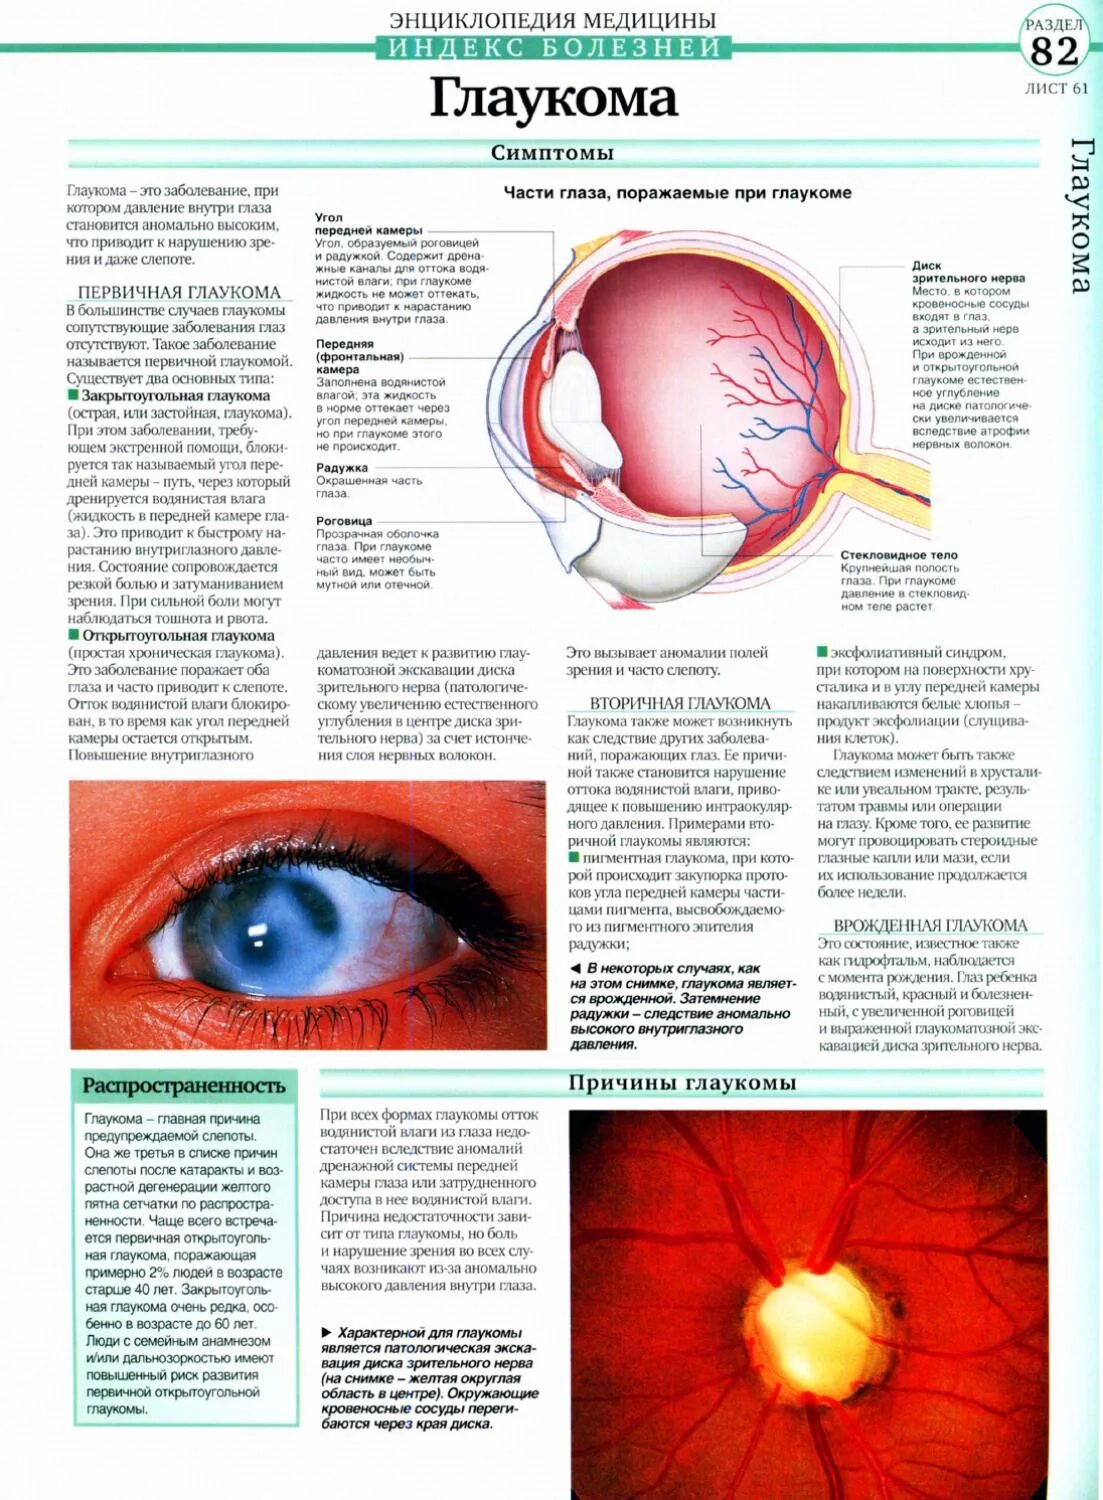 Заболевания глаз список. Глаукома памятка. Плакат глазные болезни. Глаукома плакат.